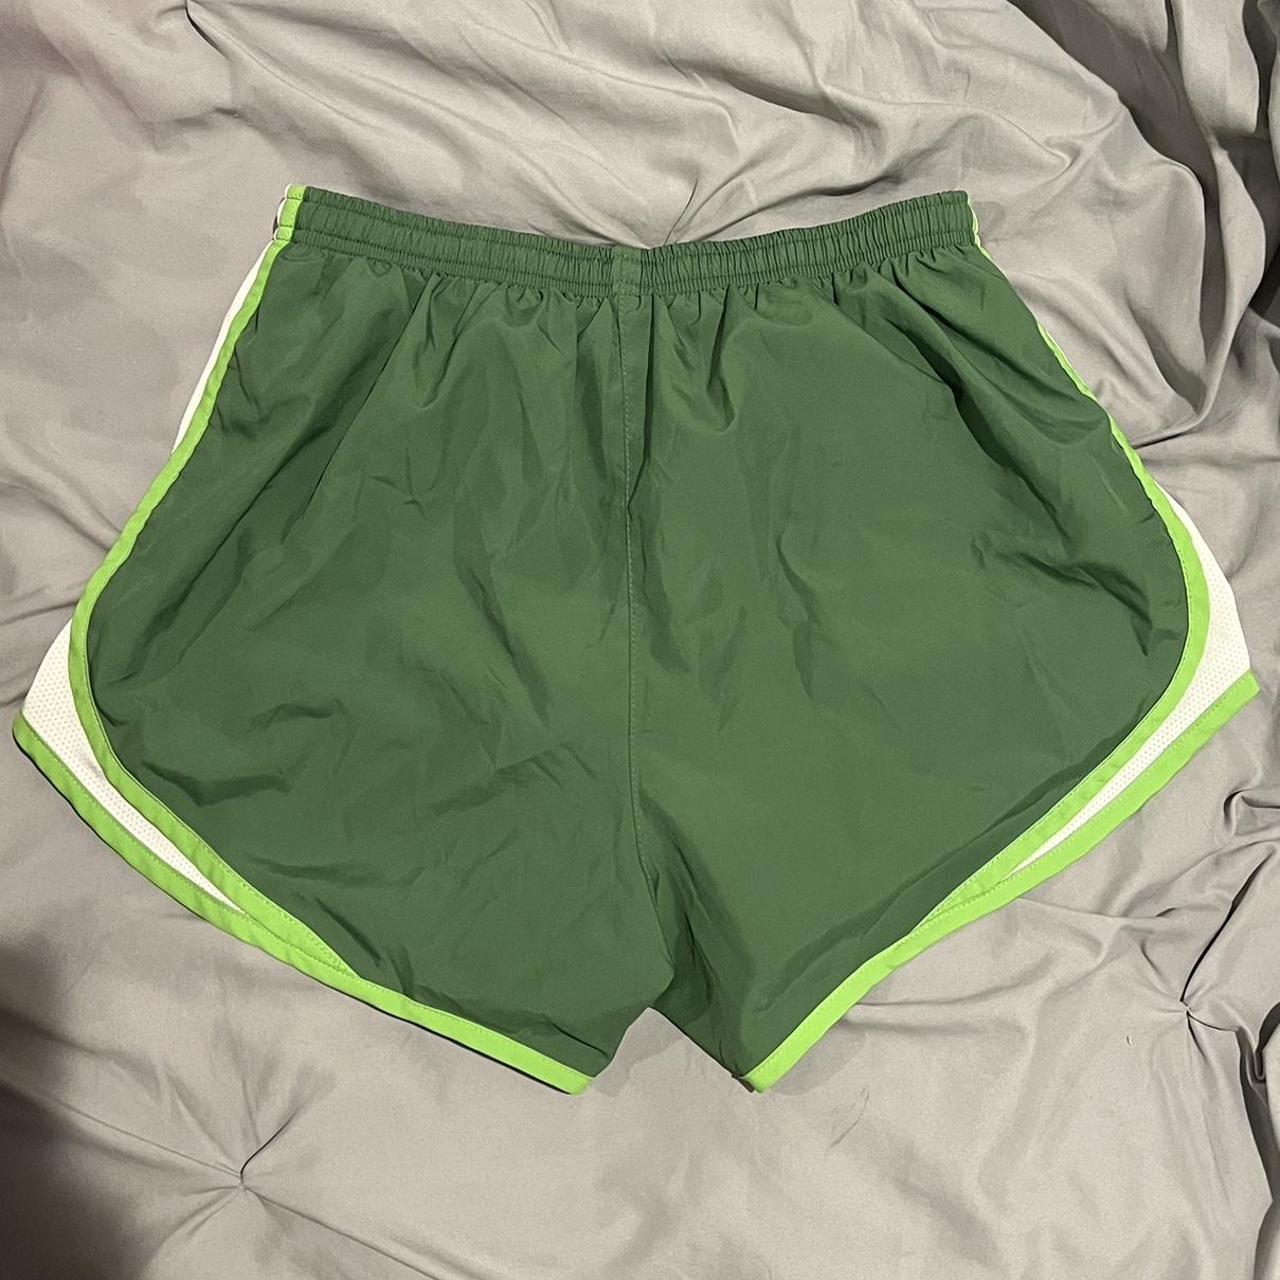 VINTAGE green nike running shorts!! such a pretty - Depop